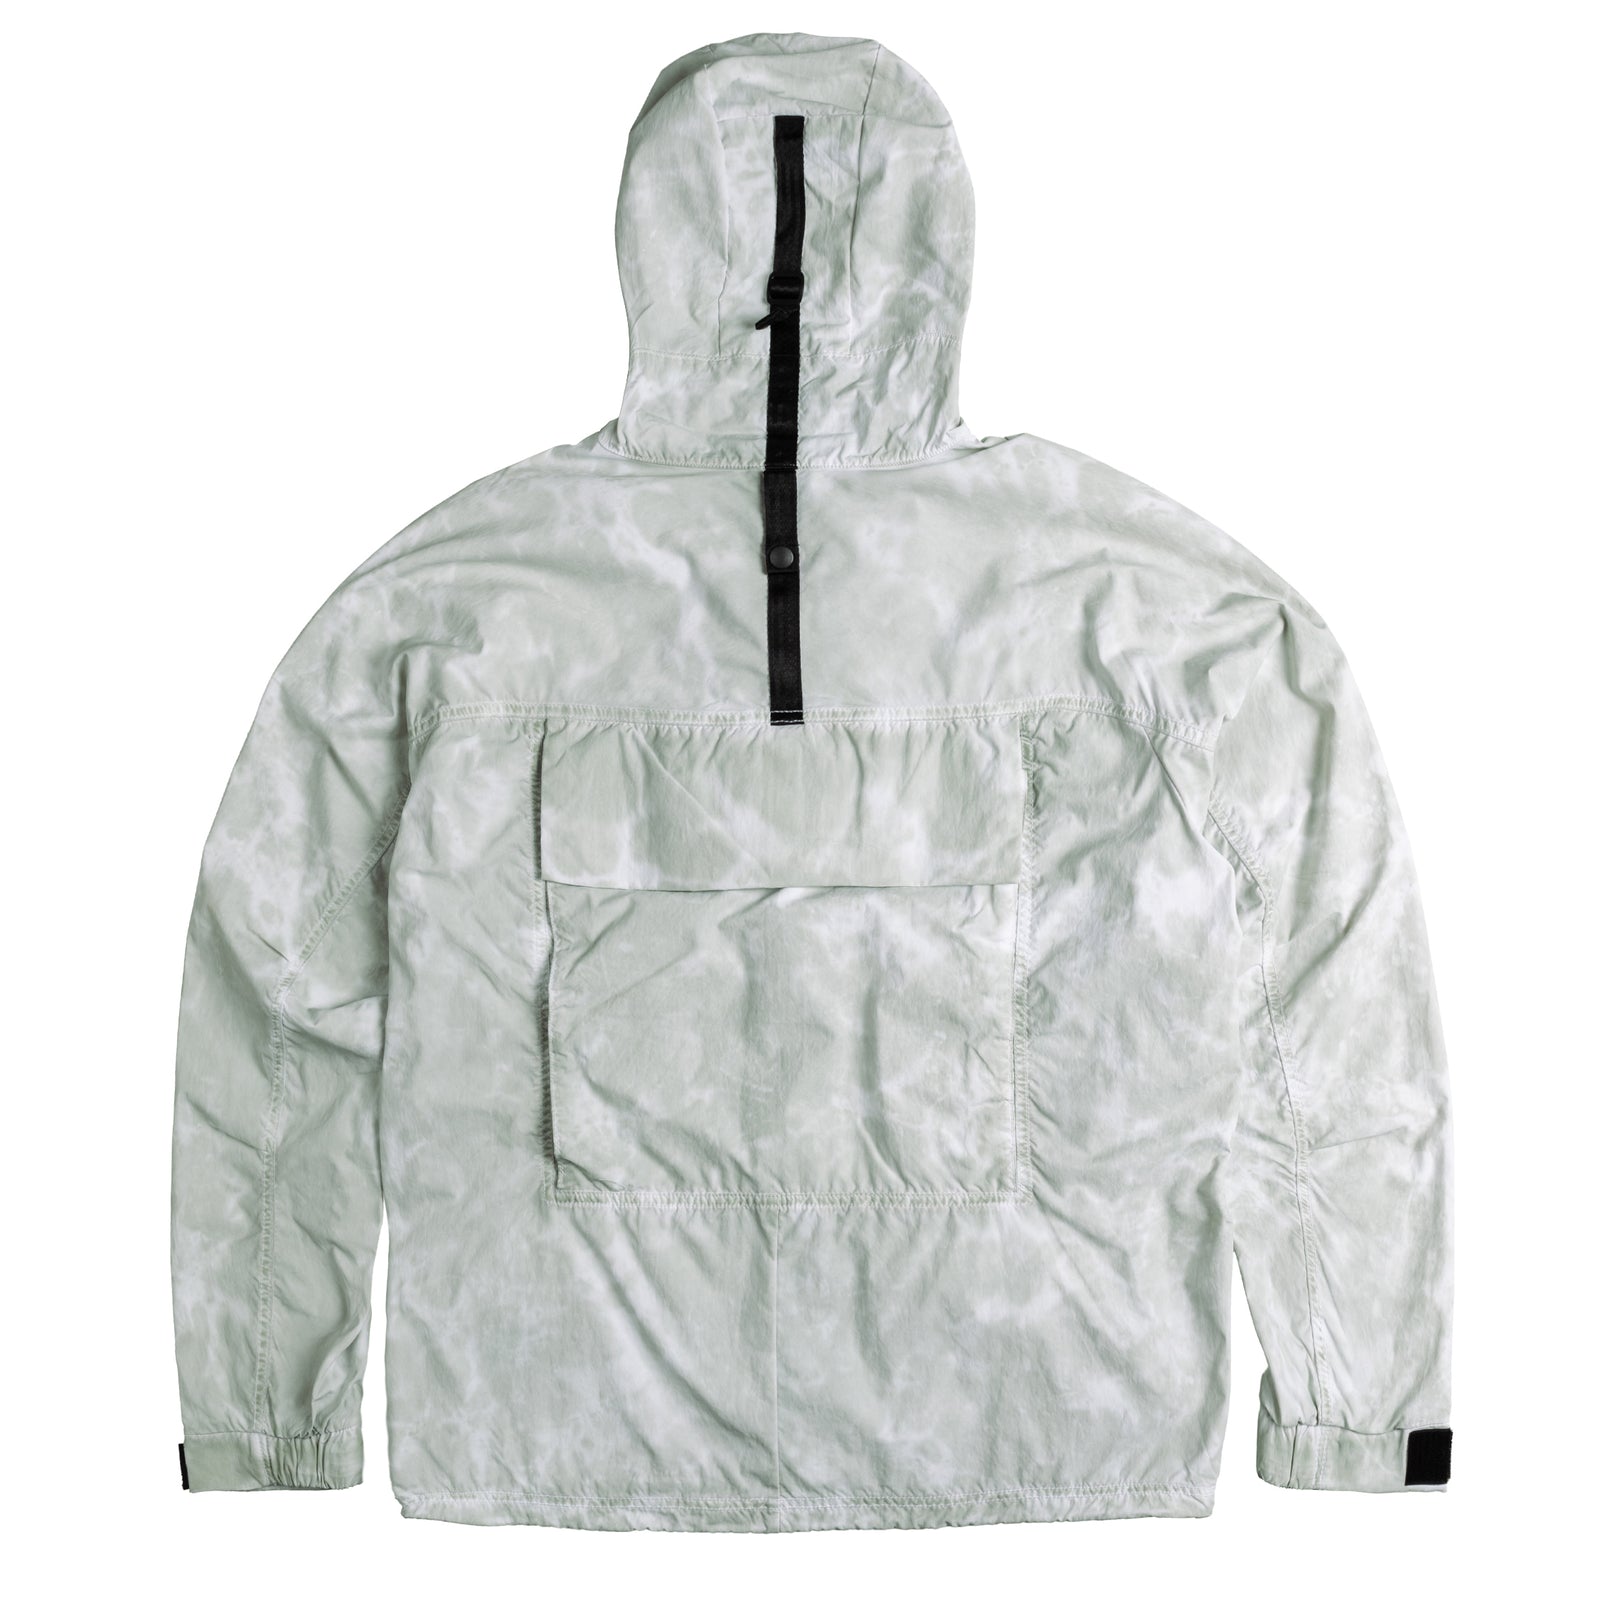 Nike Tech Pack Hooded Woven Jacket
Light Silver